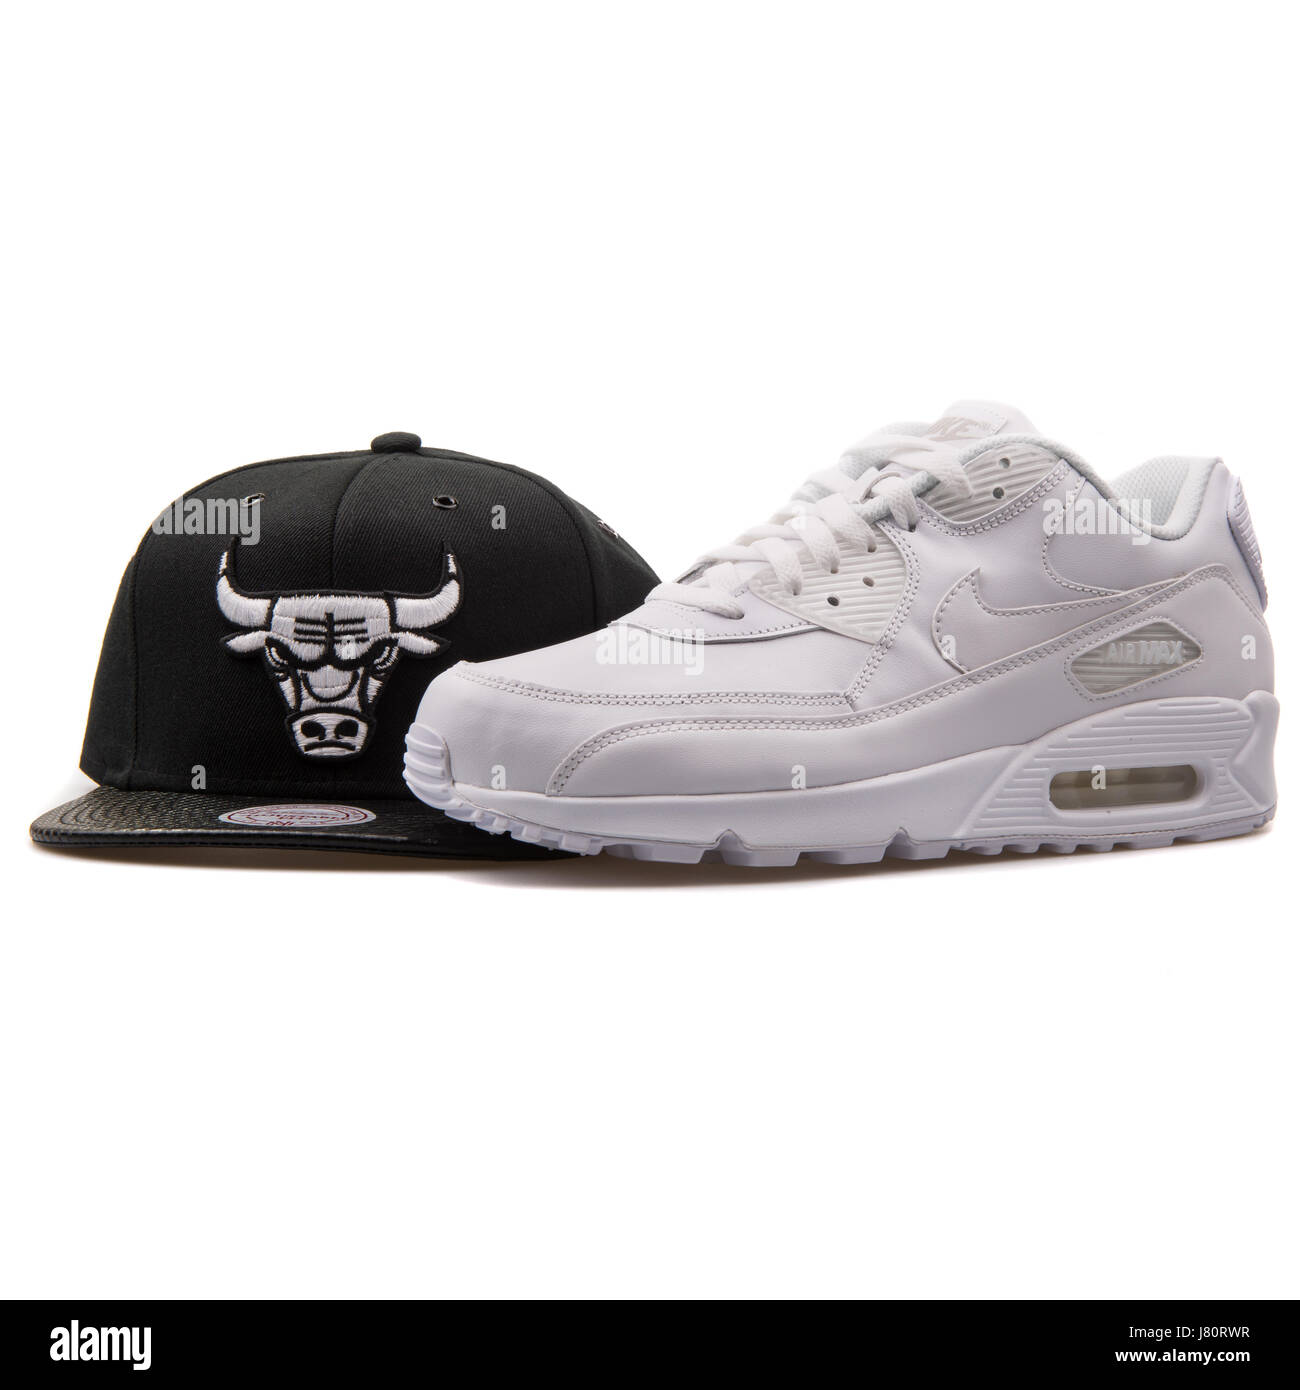 White Nike Air Max Sneaker and Black Mitchell & Ness Chicago Bulls Cap  Stock Photo - Alamy